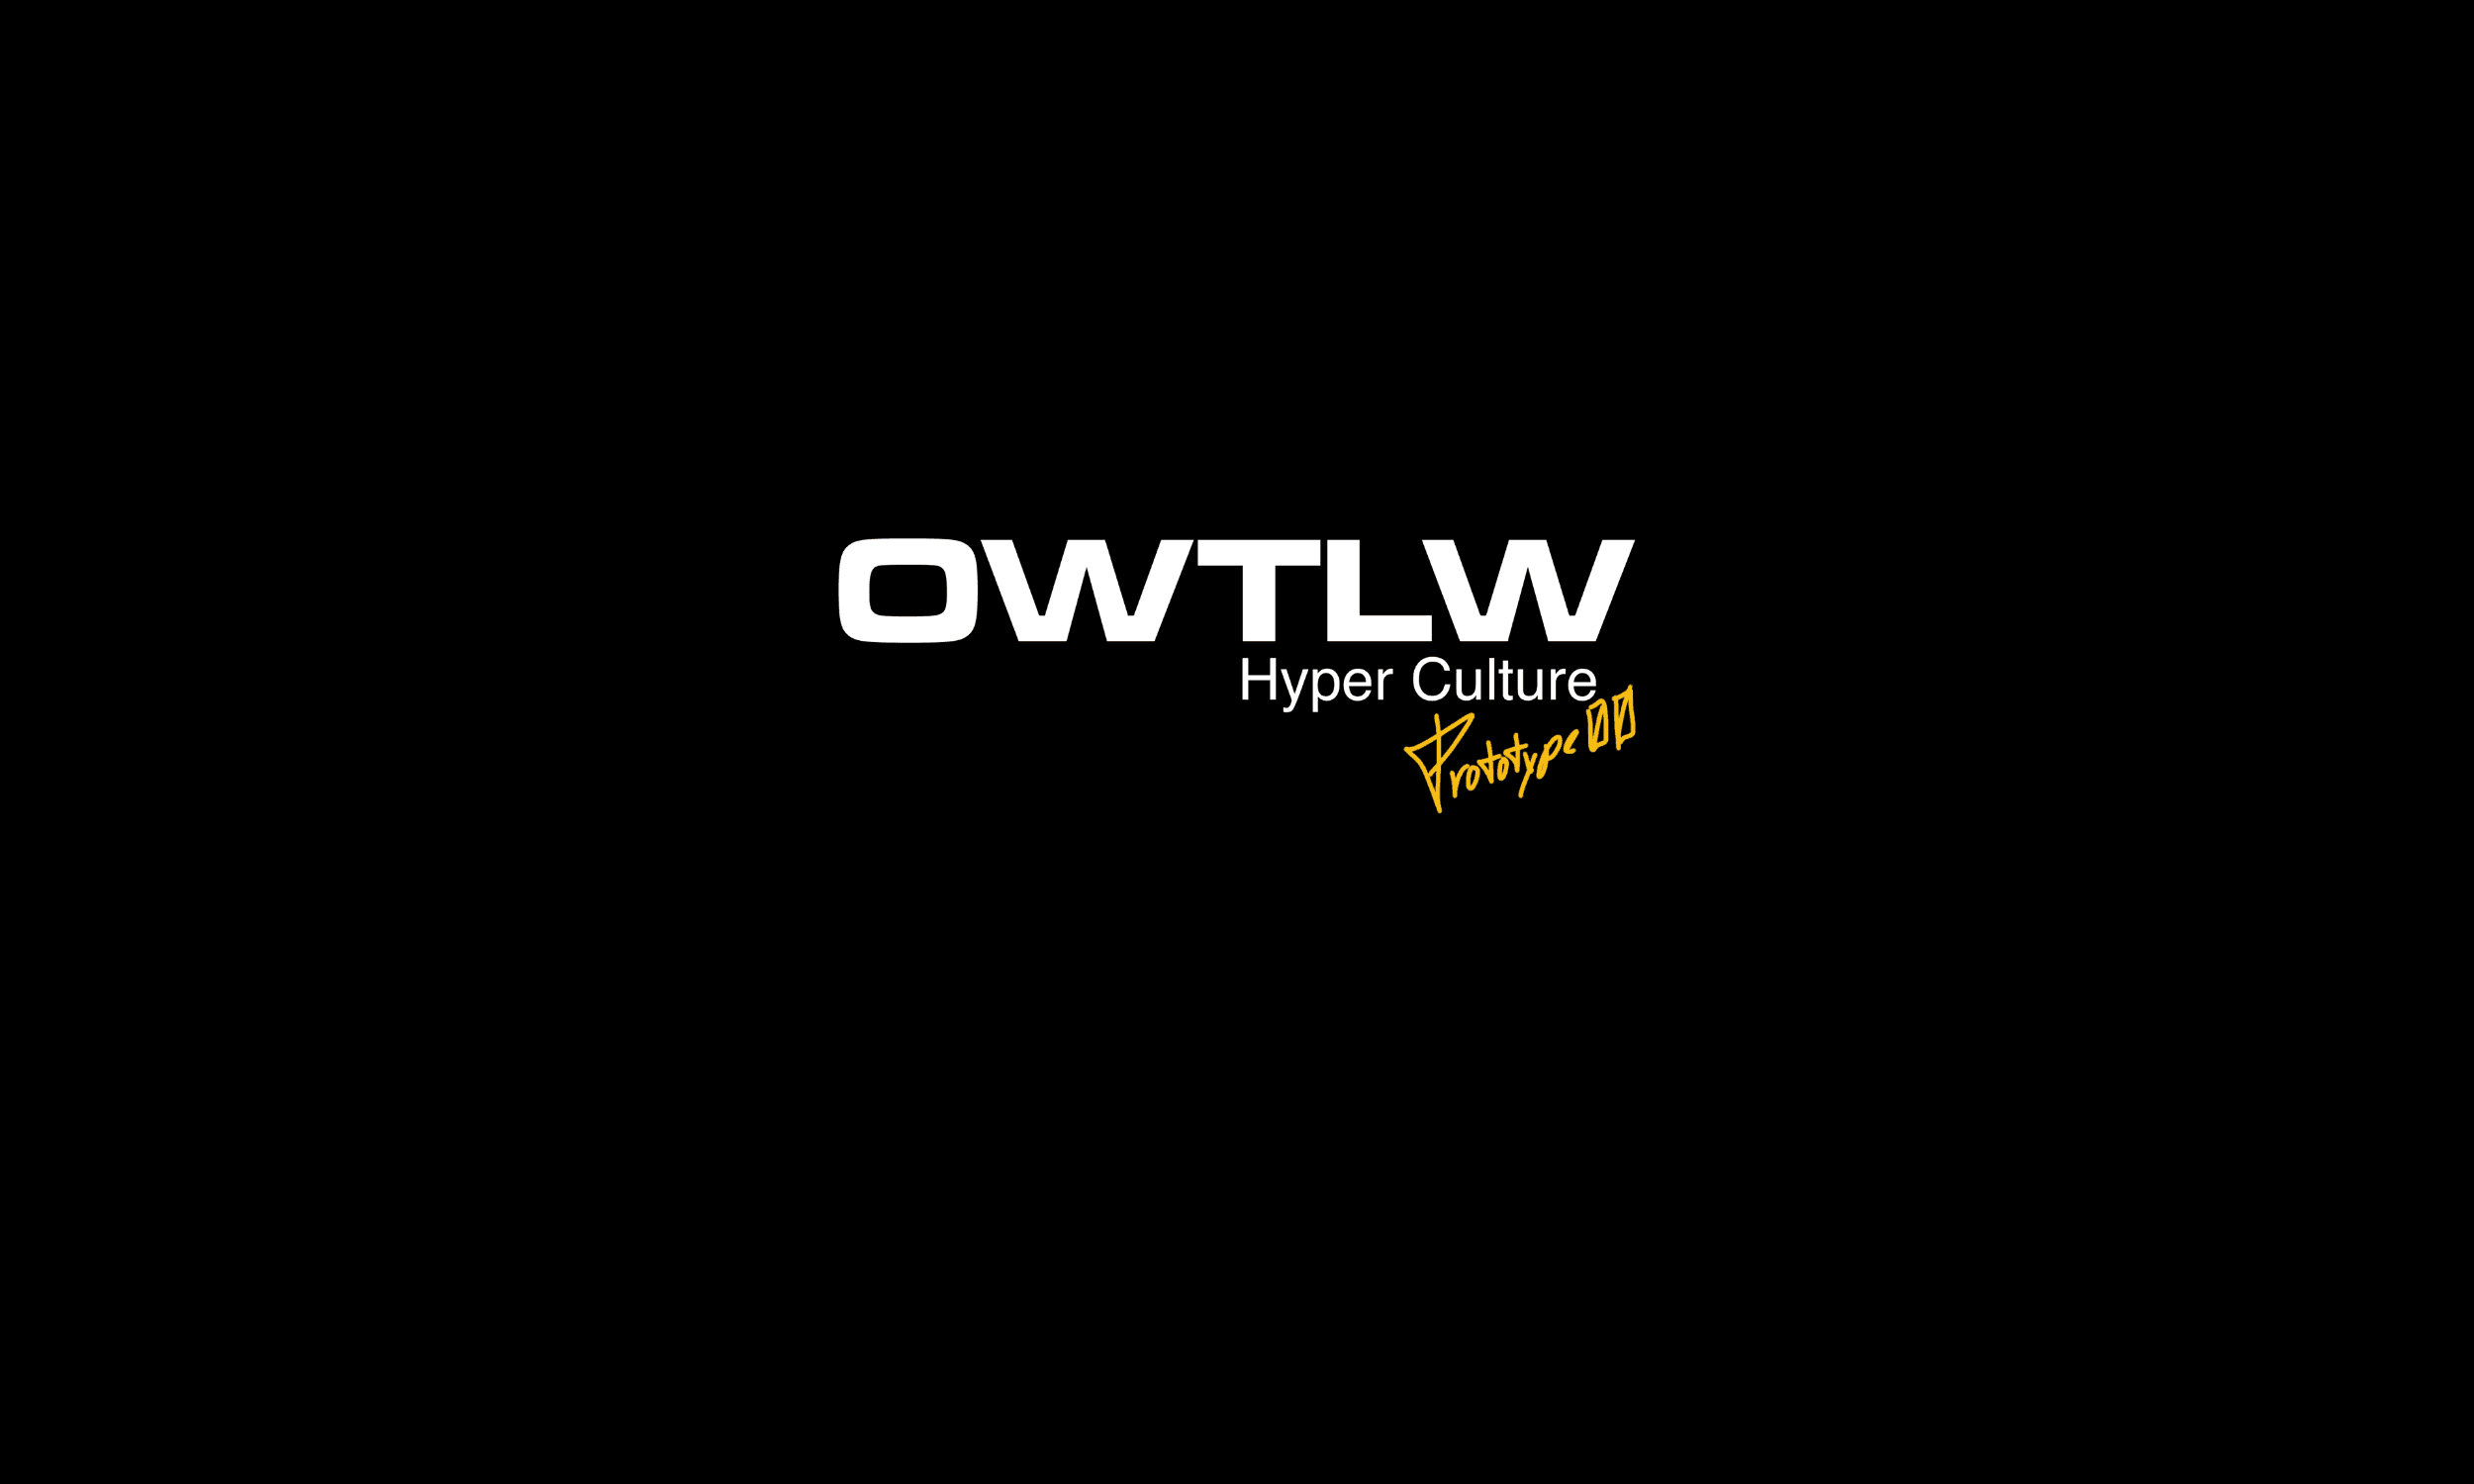 OWTLW_Hyper_Culture_00 bannière